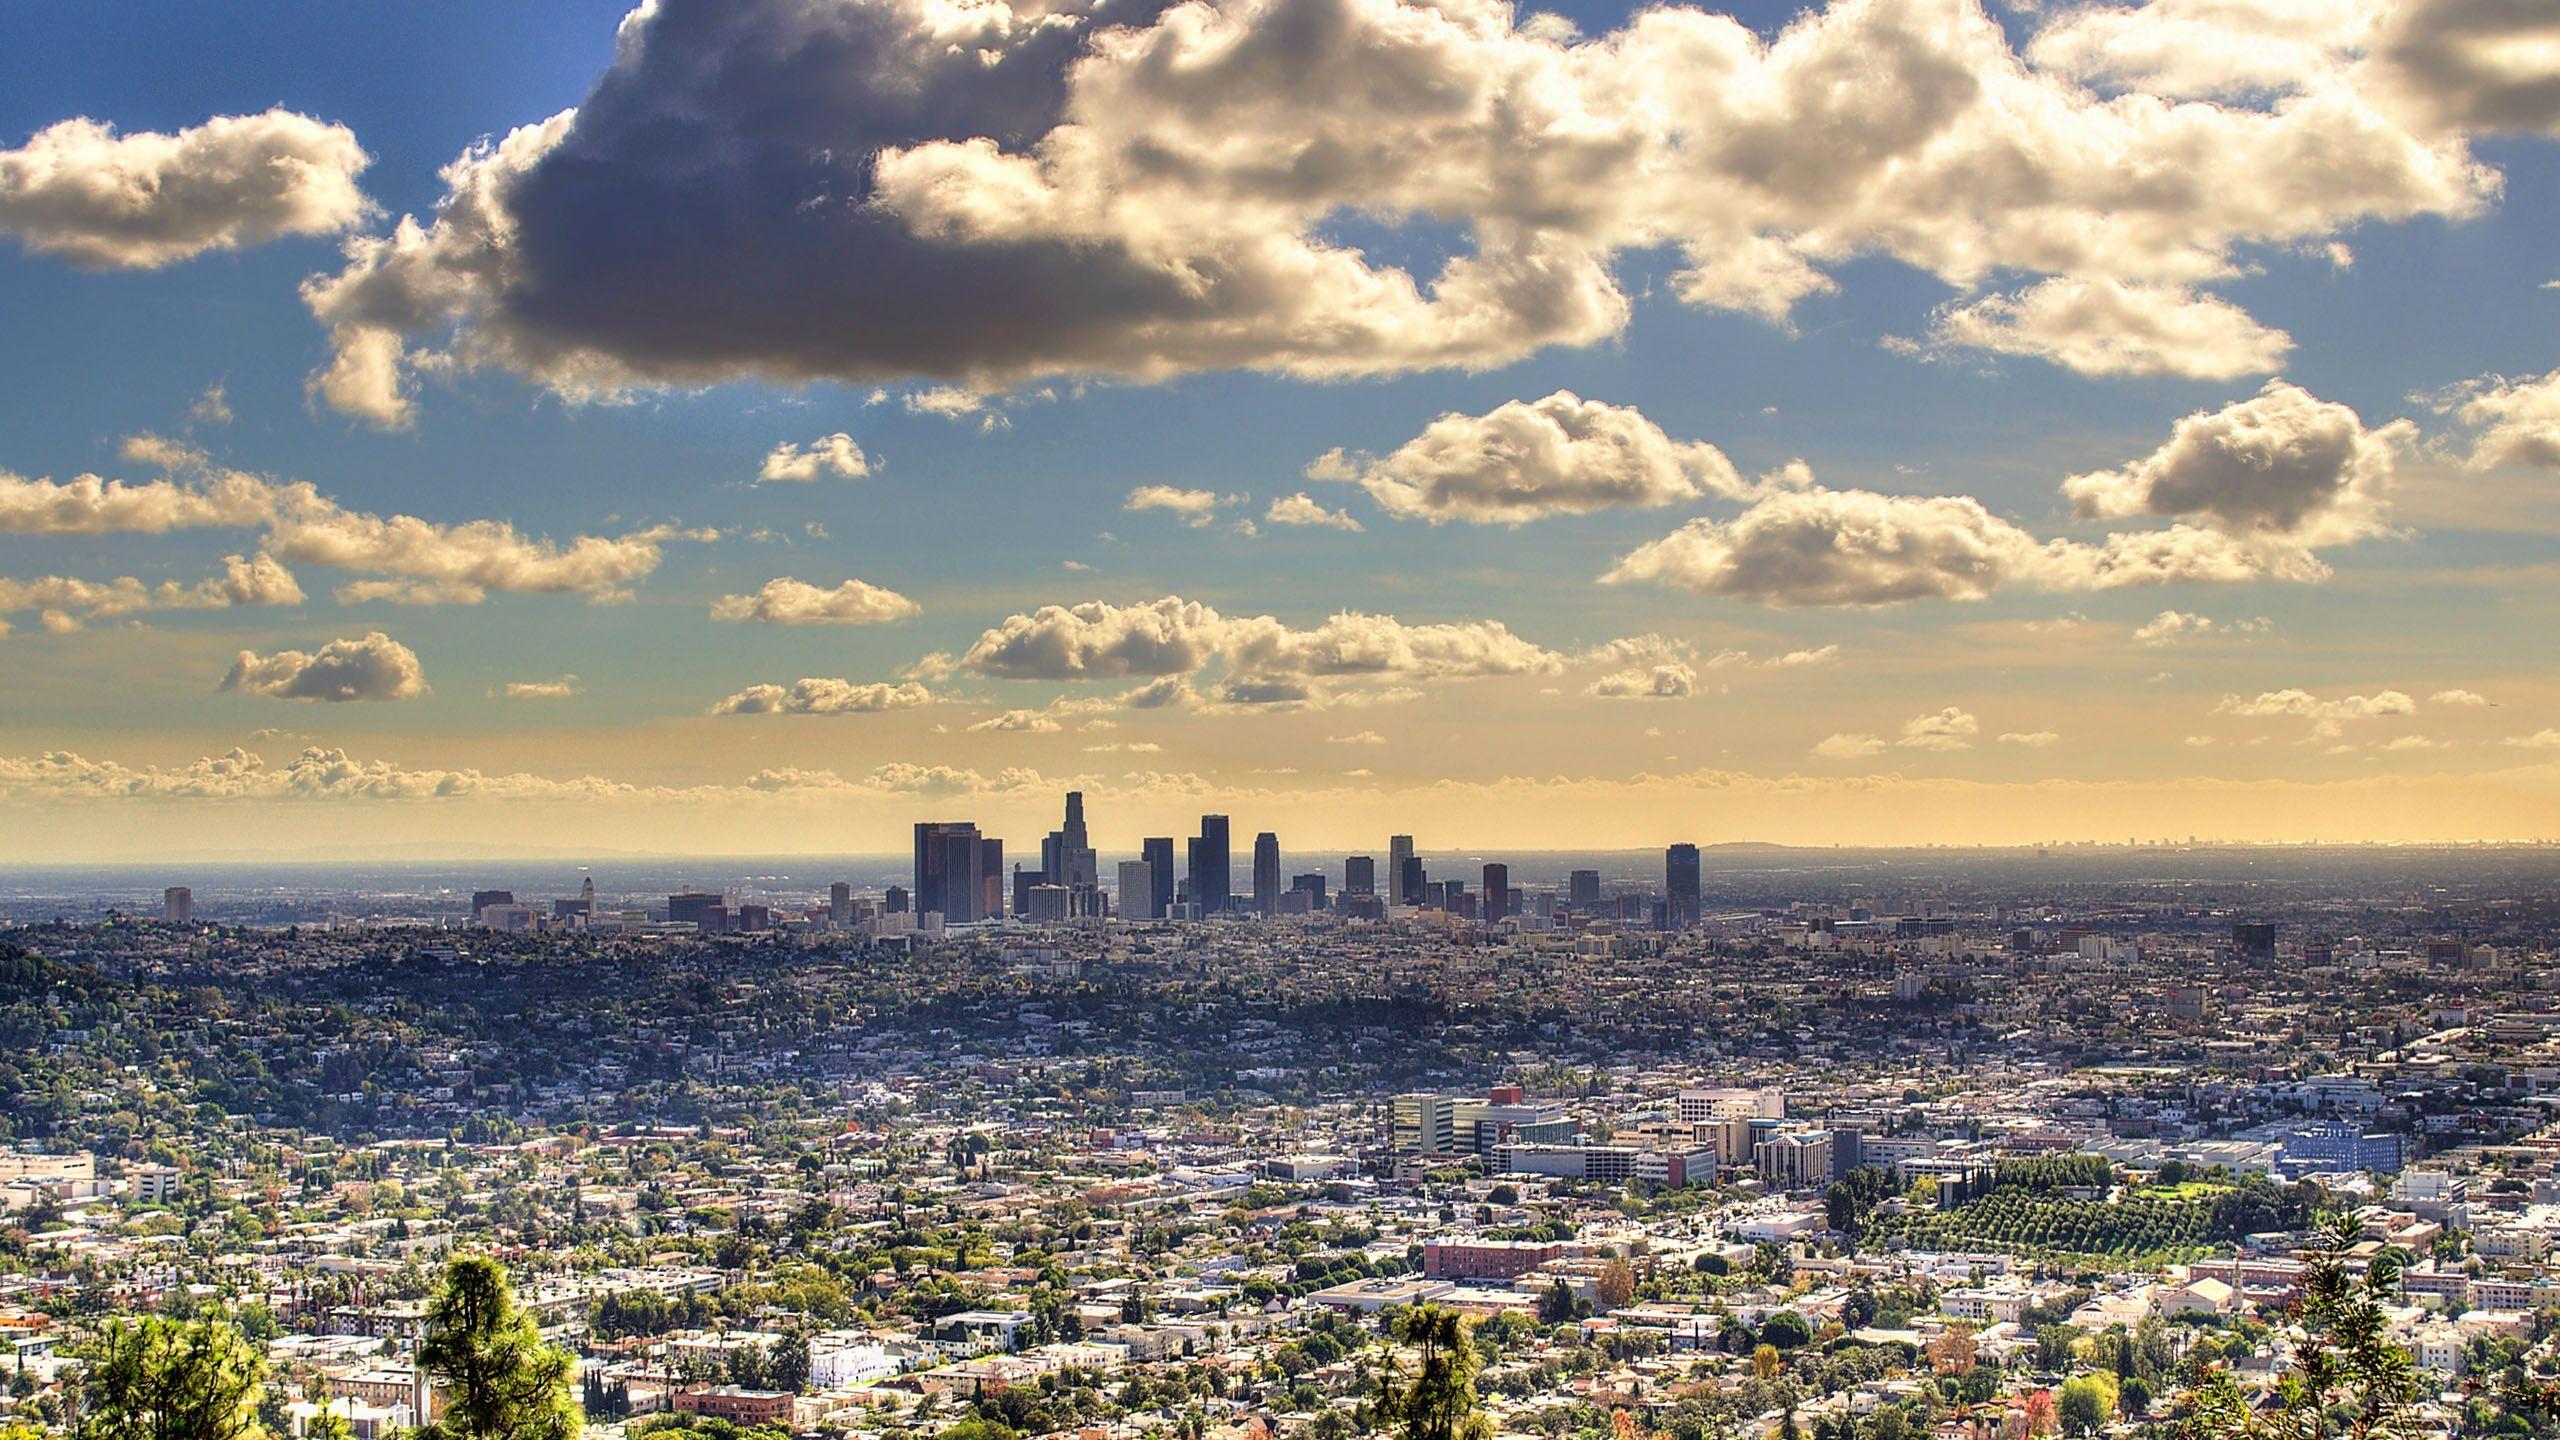 Los Angeles City Wallpaper 7178 2560 x 1440